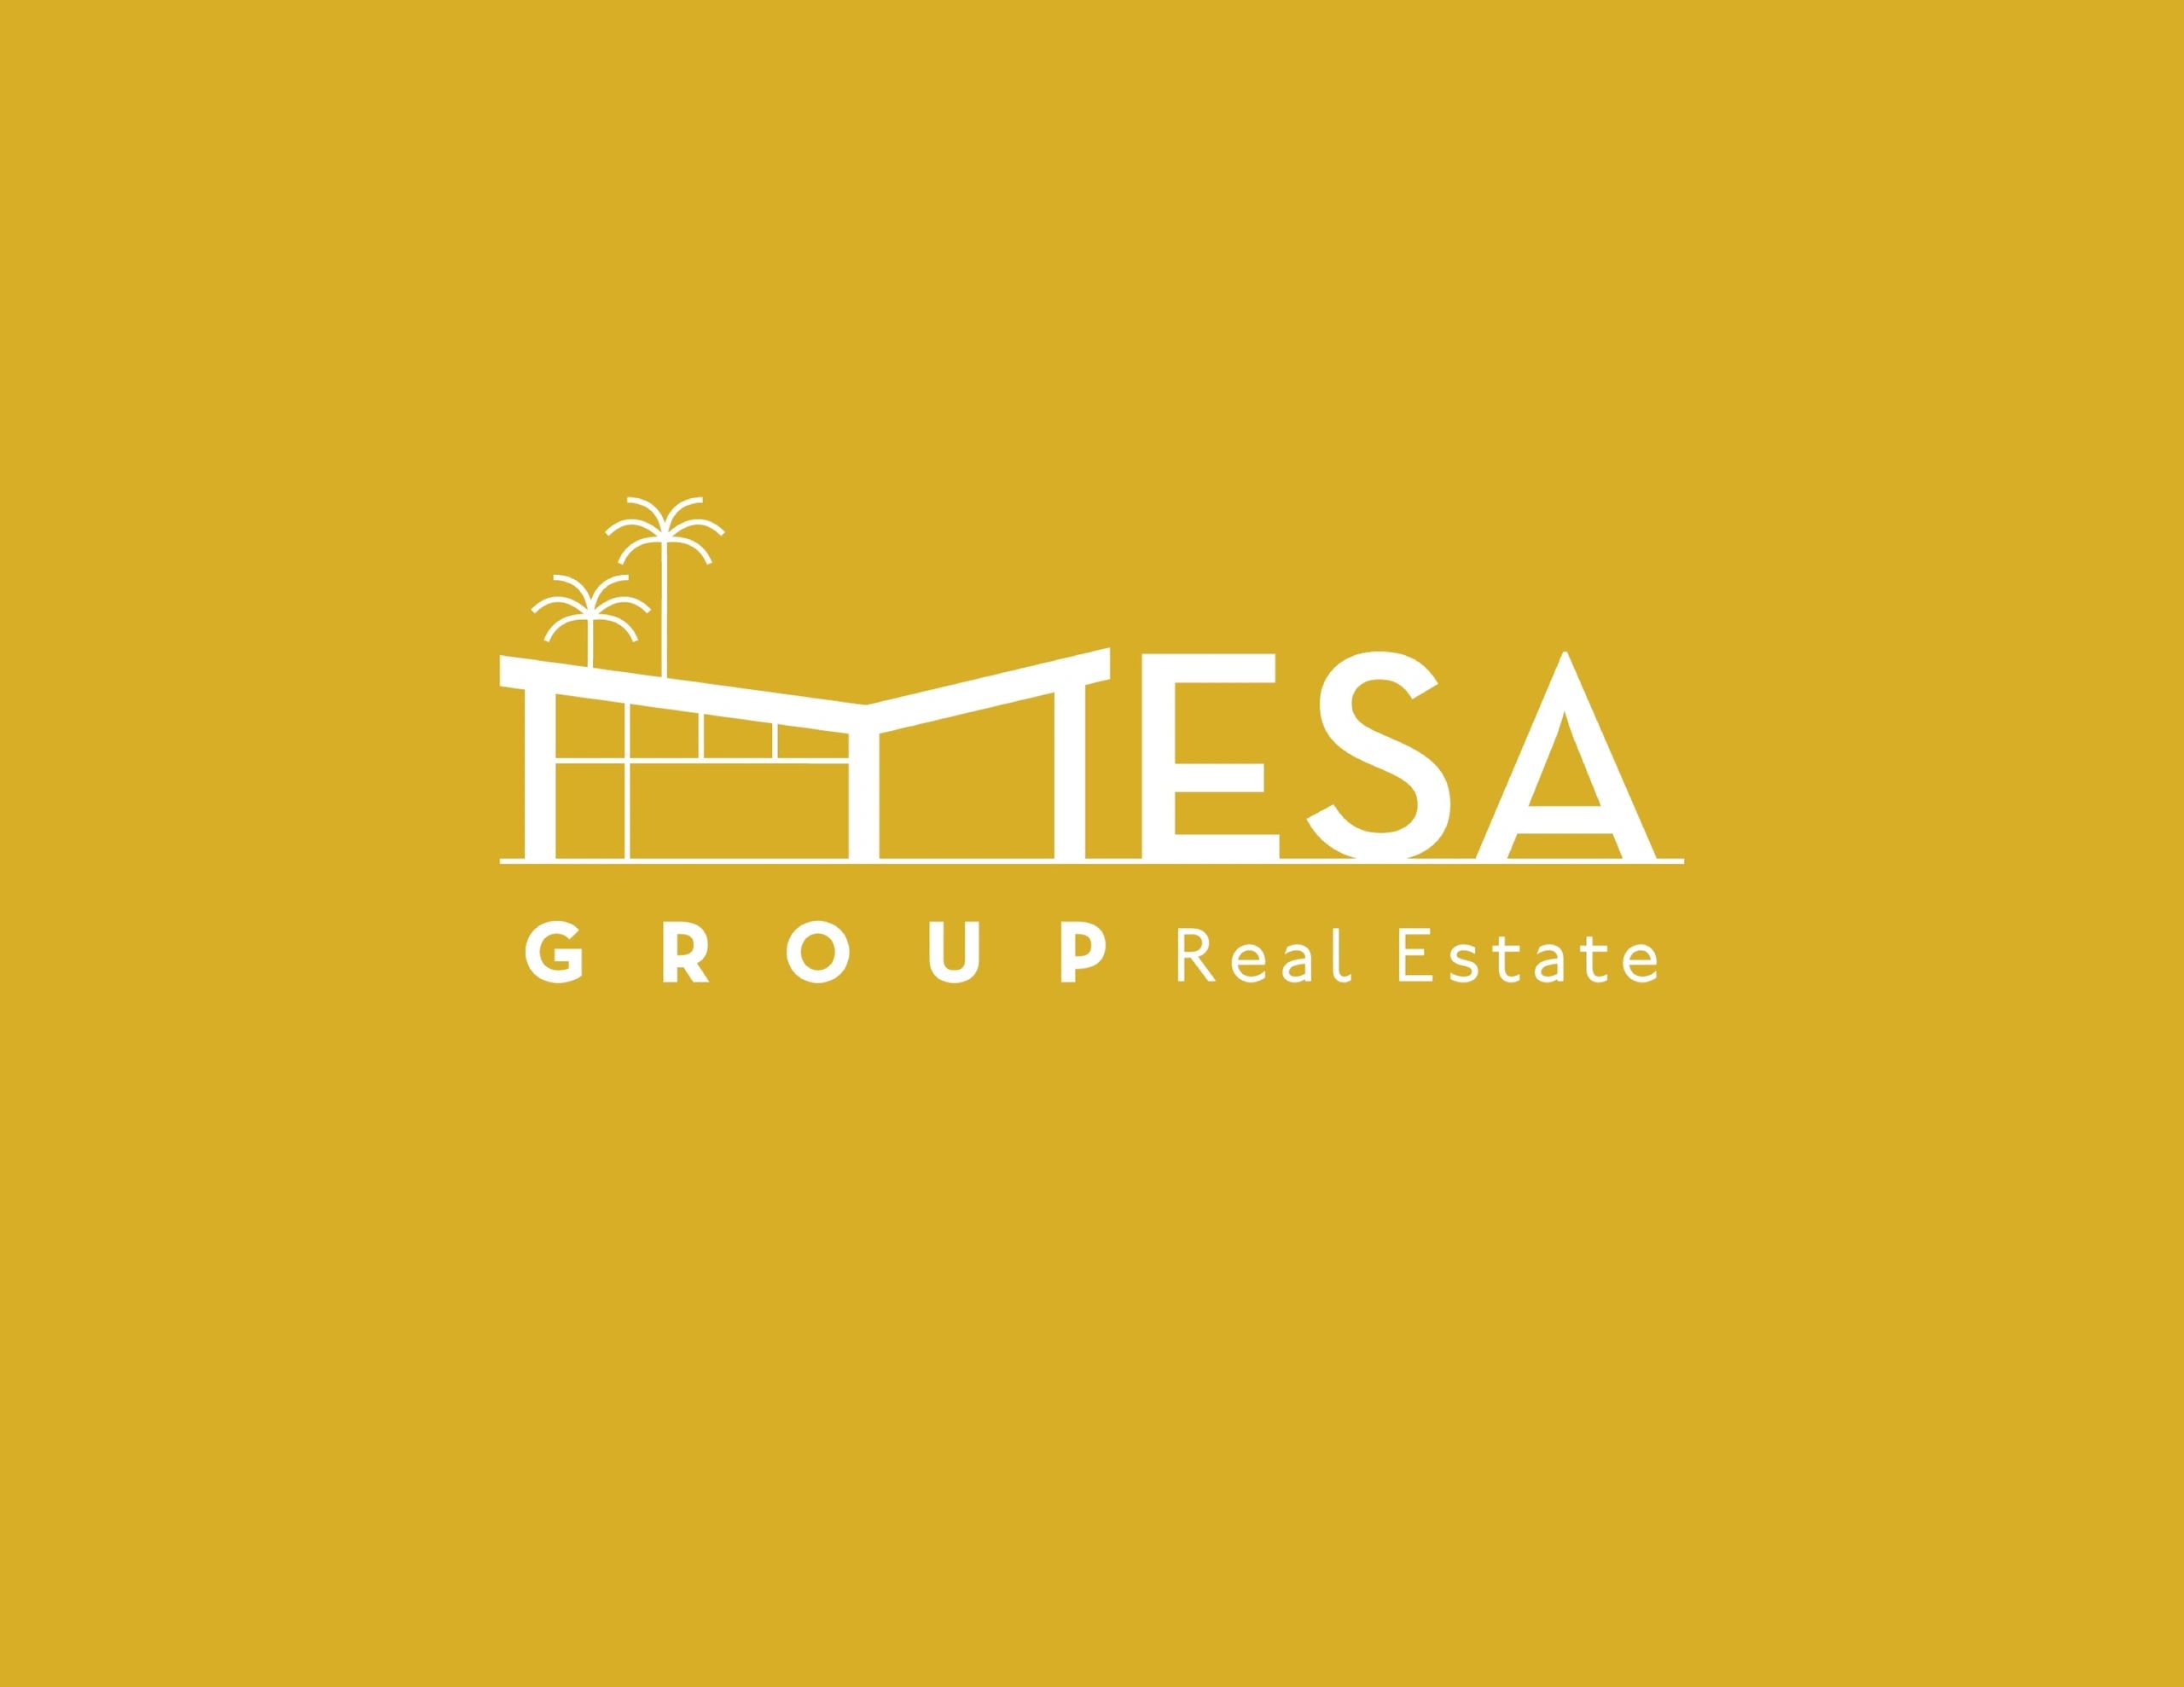 Mesa Group Real Estate